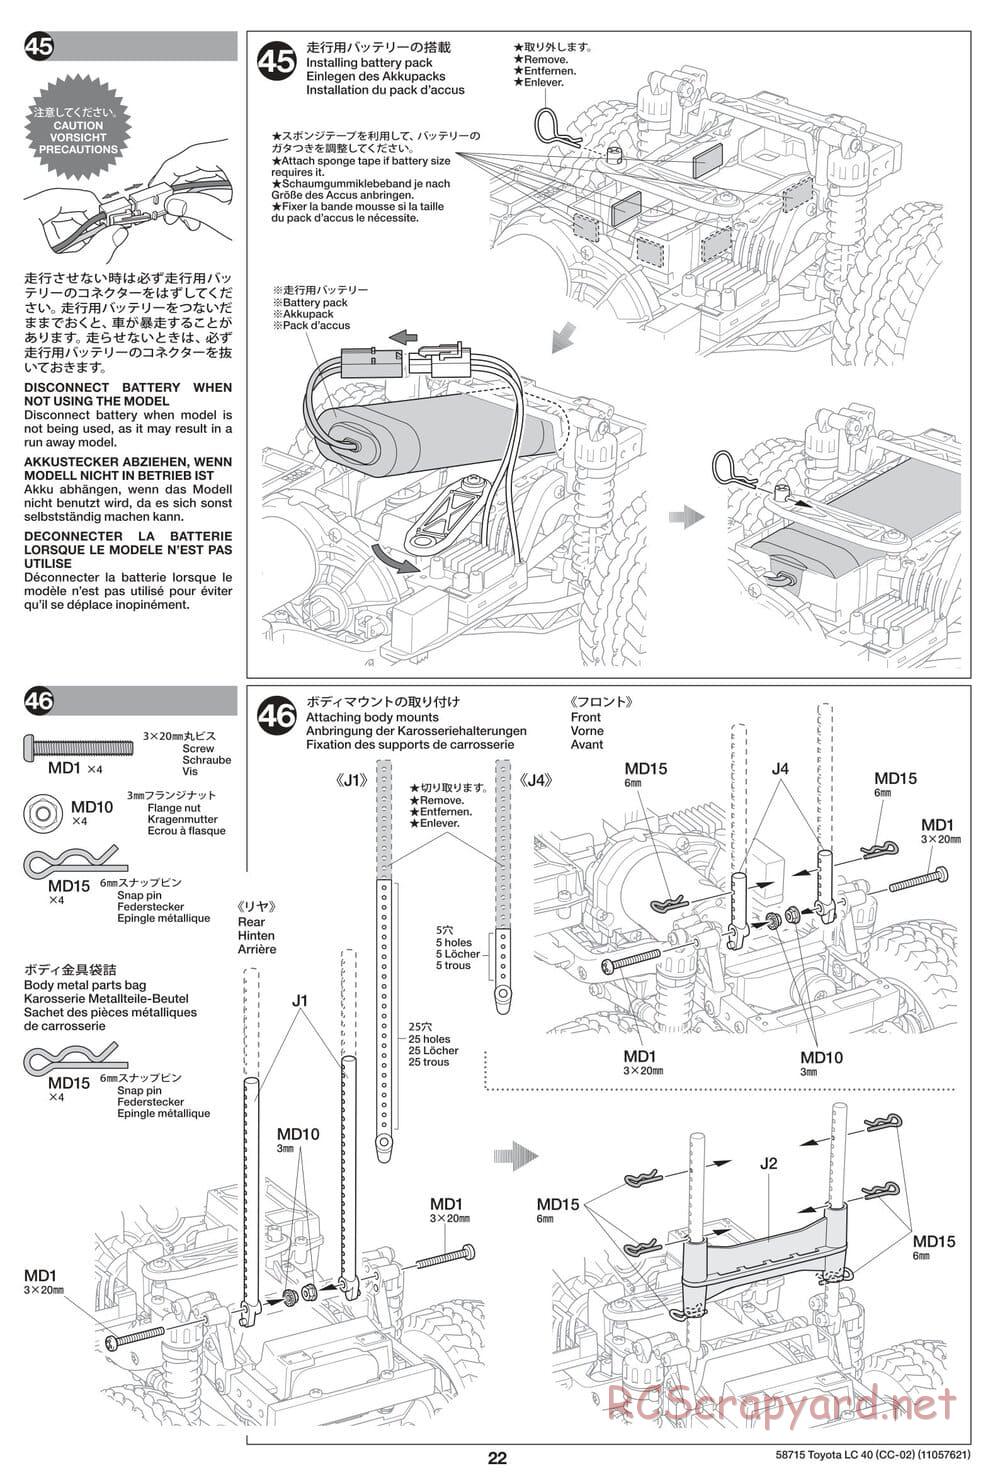 Tamiya - Toyota Land Cruiser 40 - CC-02 Chassis - Manual - Page 22